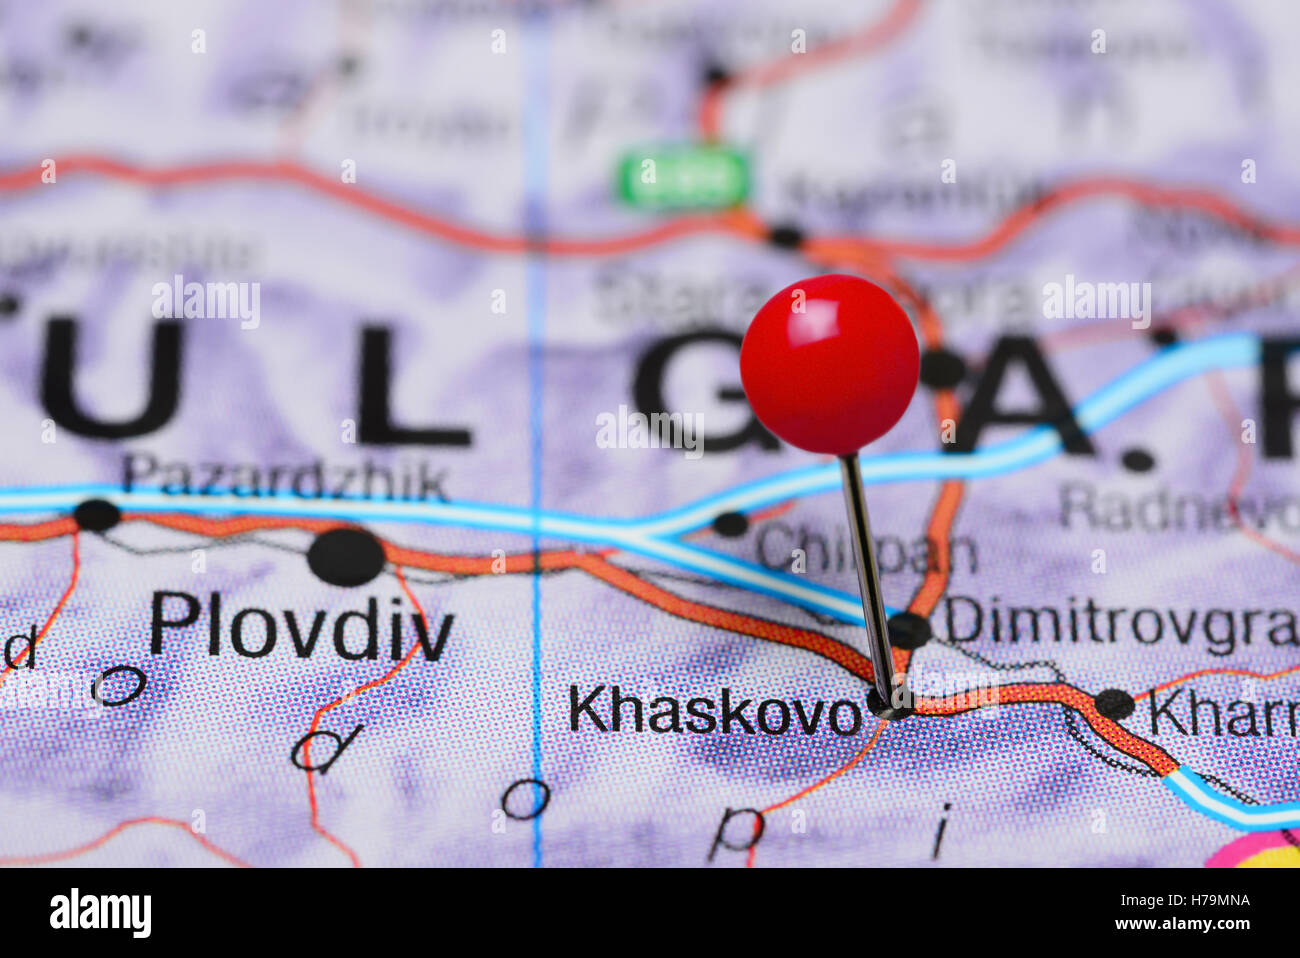 Khaskovo pinned on a map of Bulgaria Stock Photo